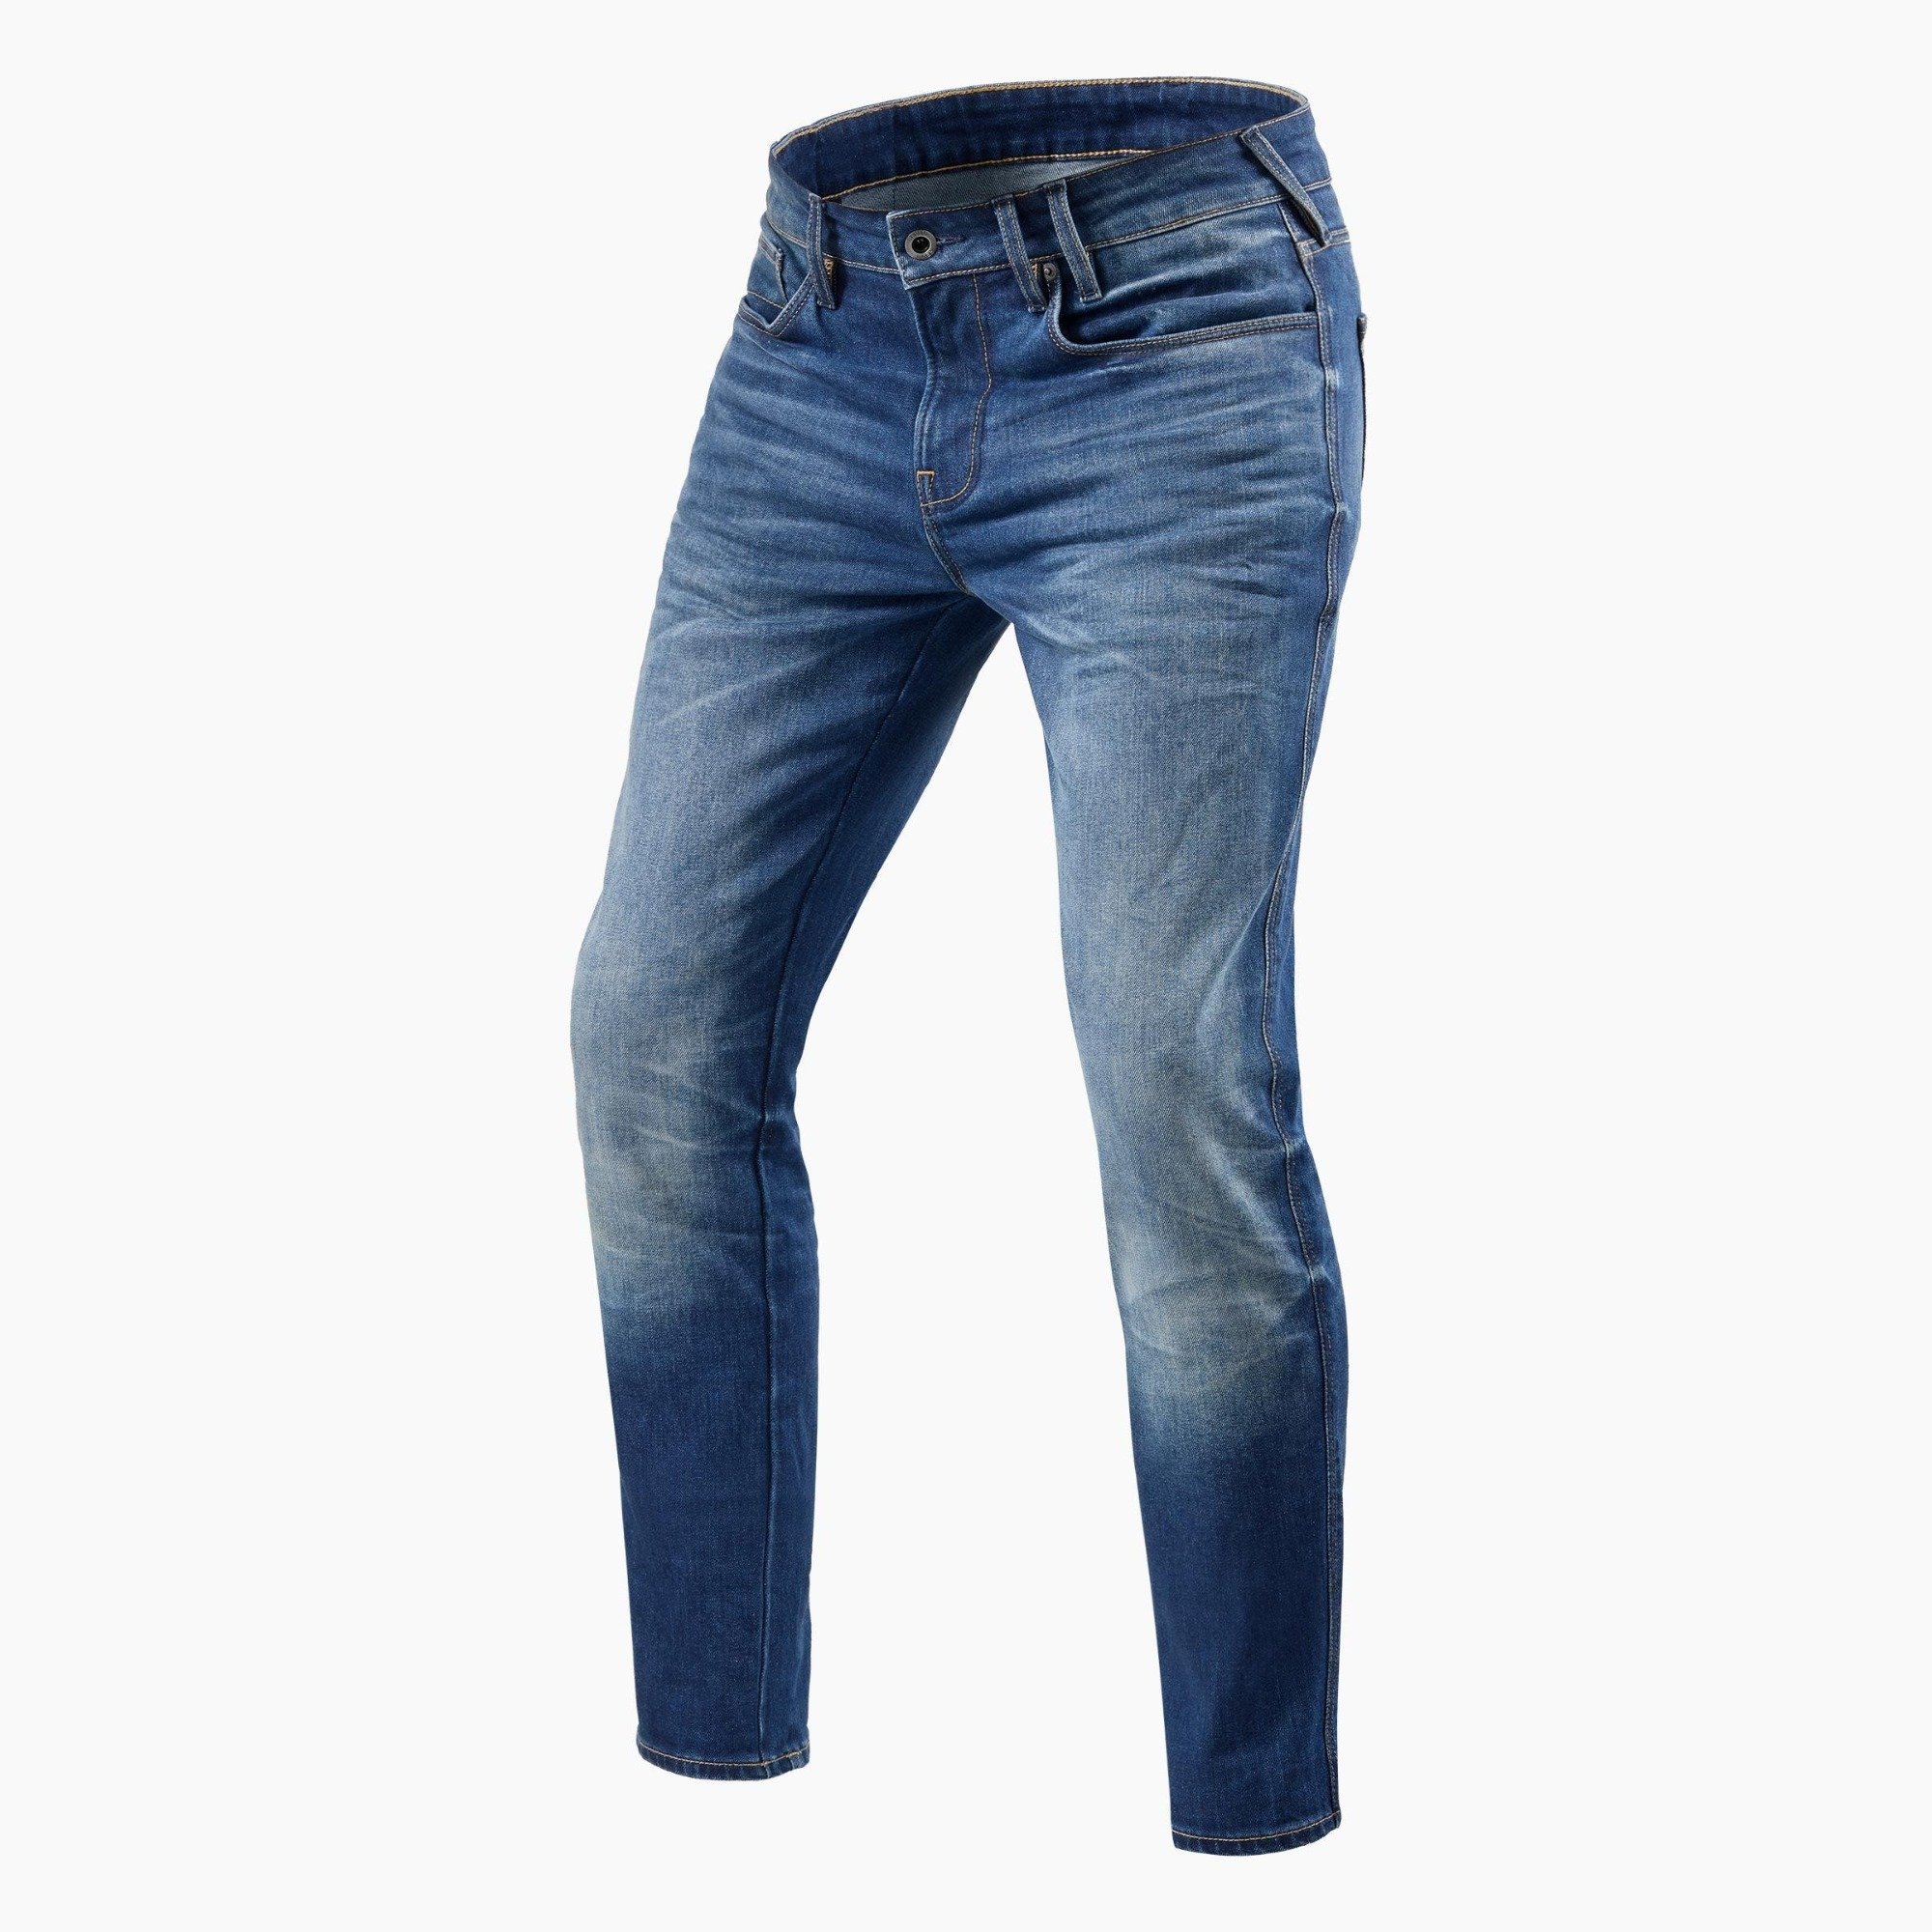 Image of REV'IT! Jeans Carlin SK Mid Blue Used Motorcycle Jeans Size L36/W32 EN